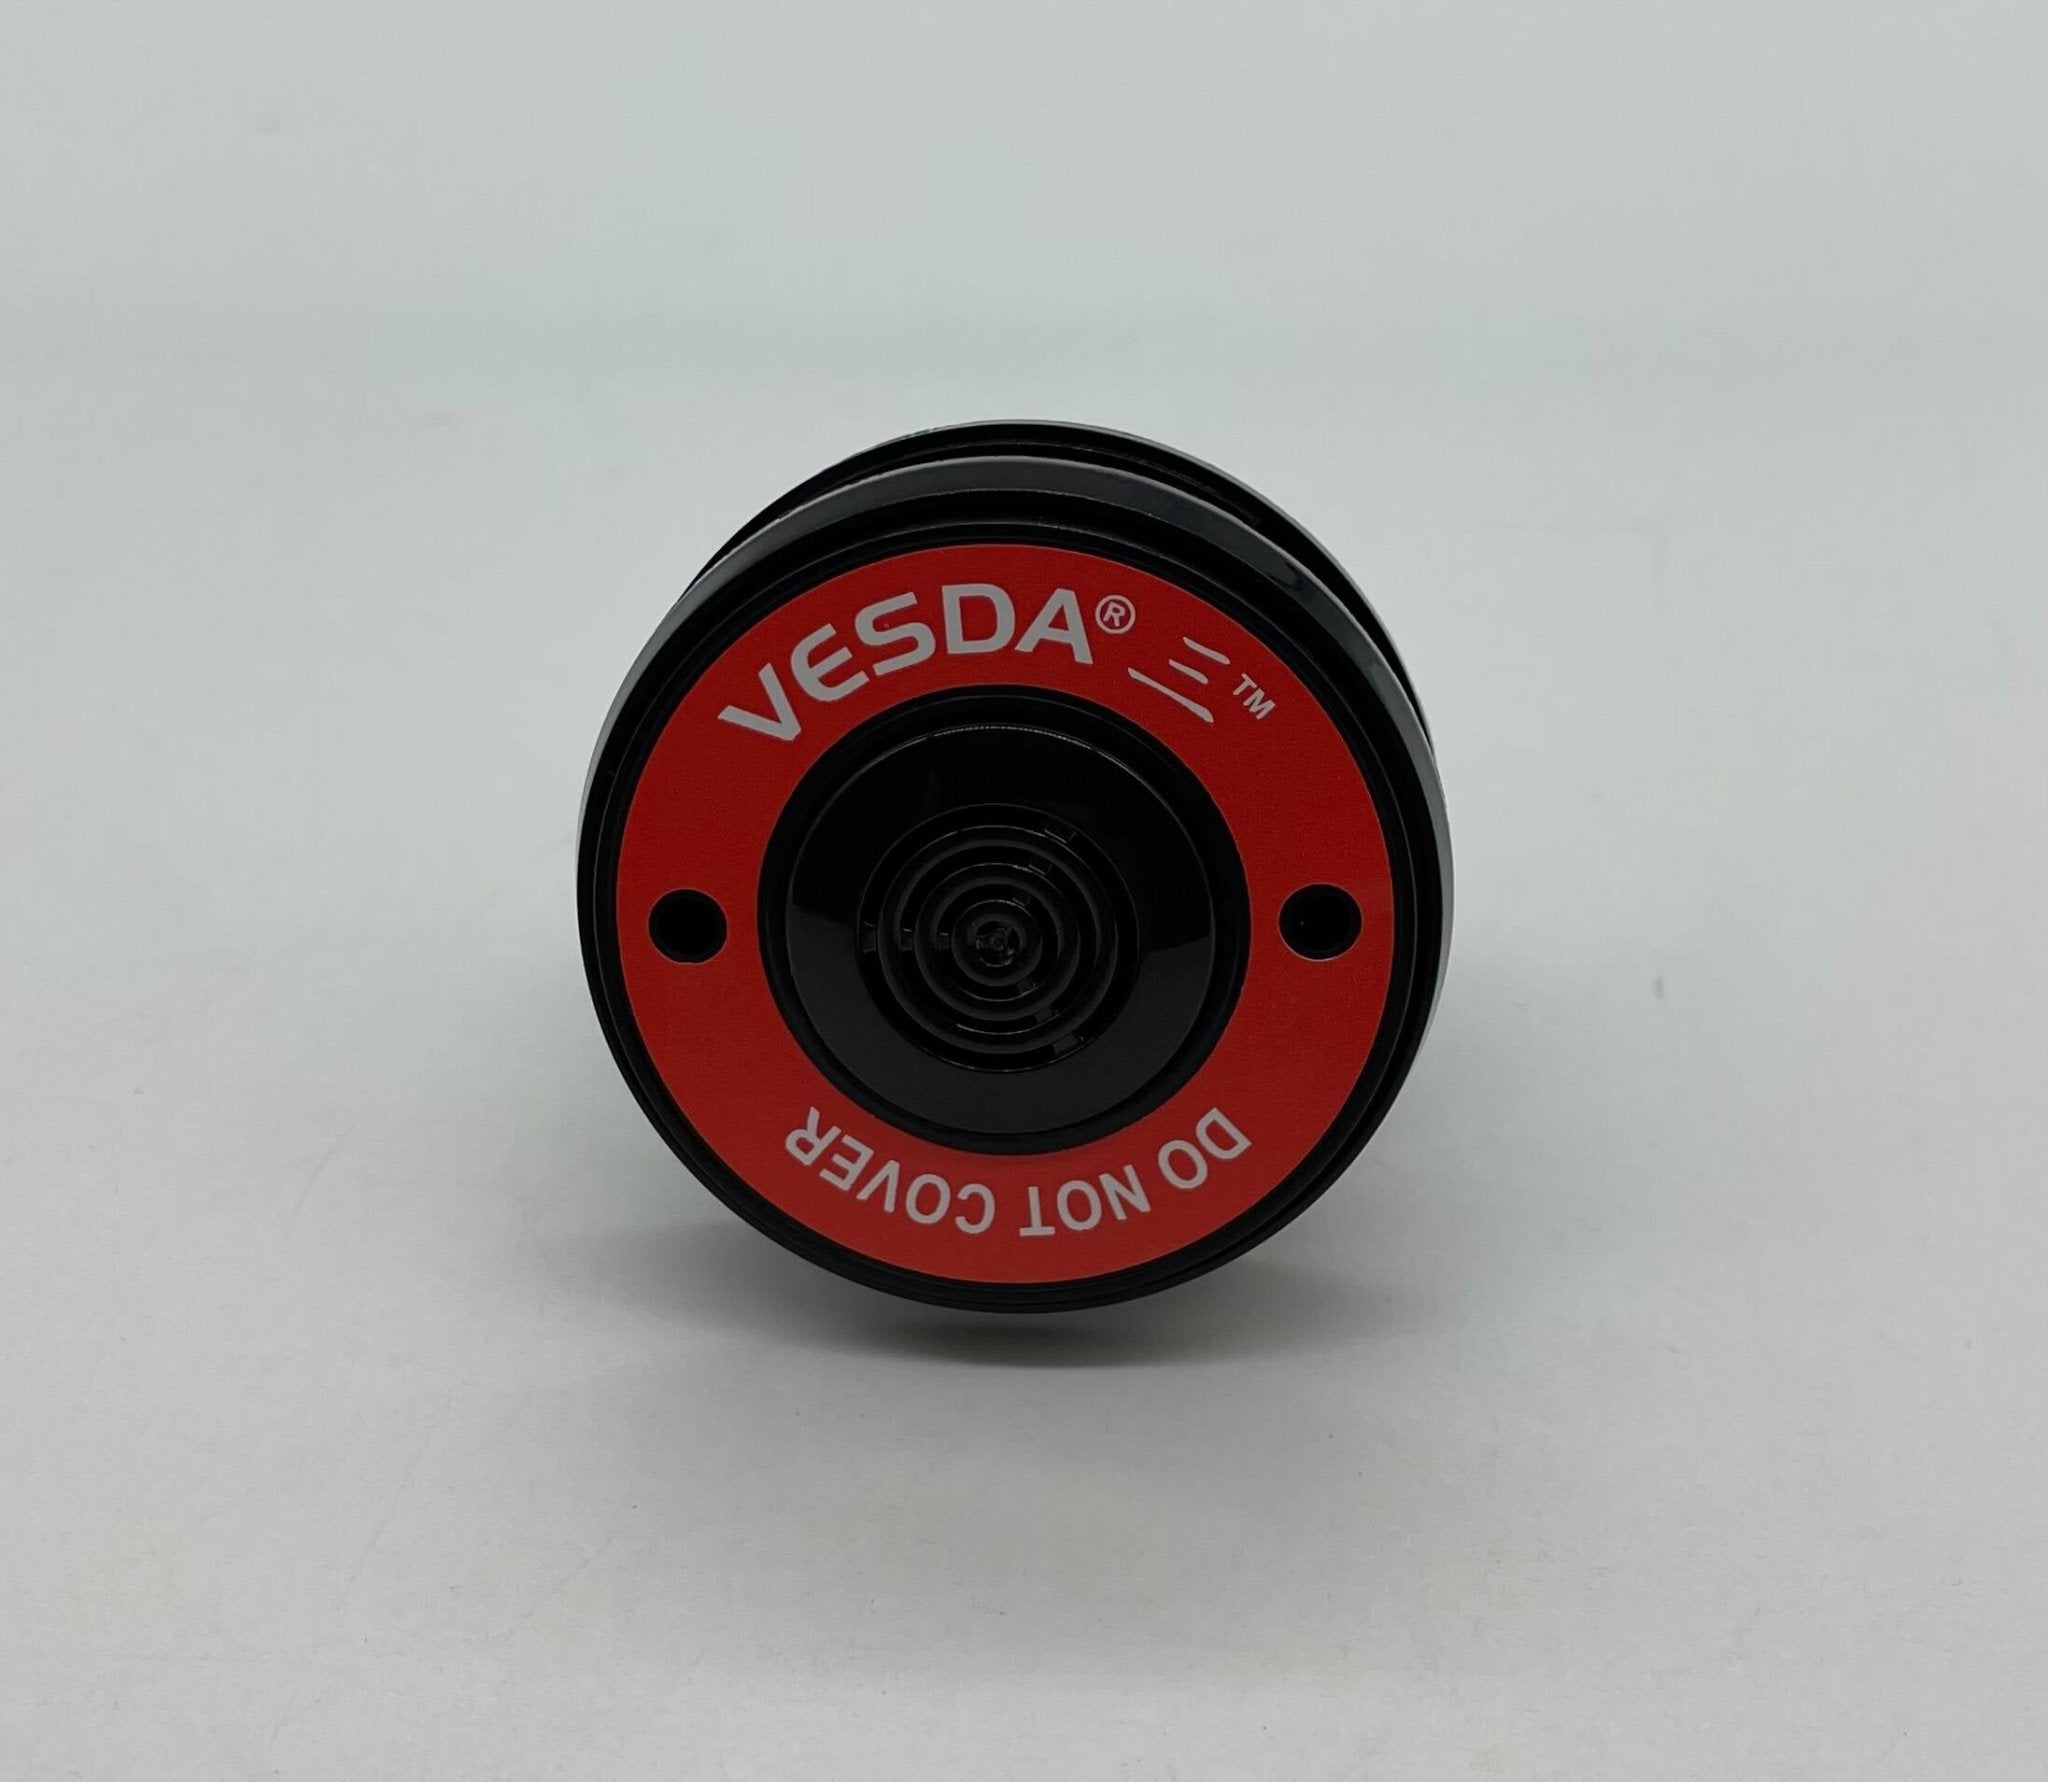 Vesda VSP-981-B Black Sampling Point - The Fire Alarm Supplier